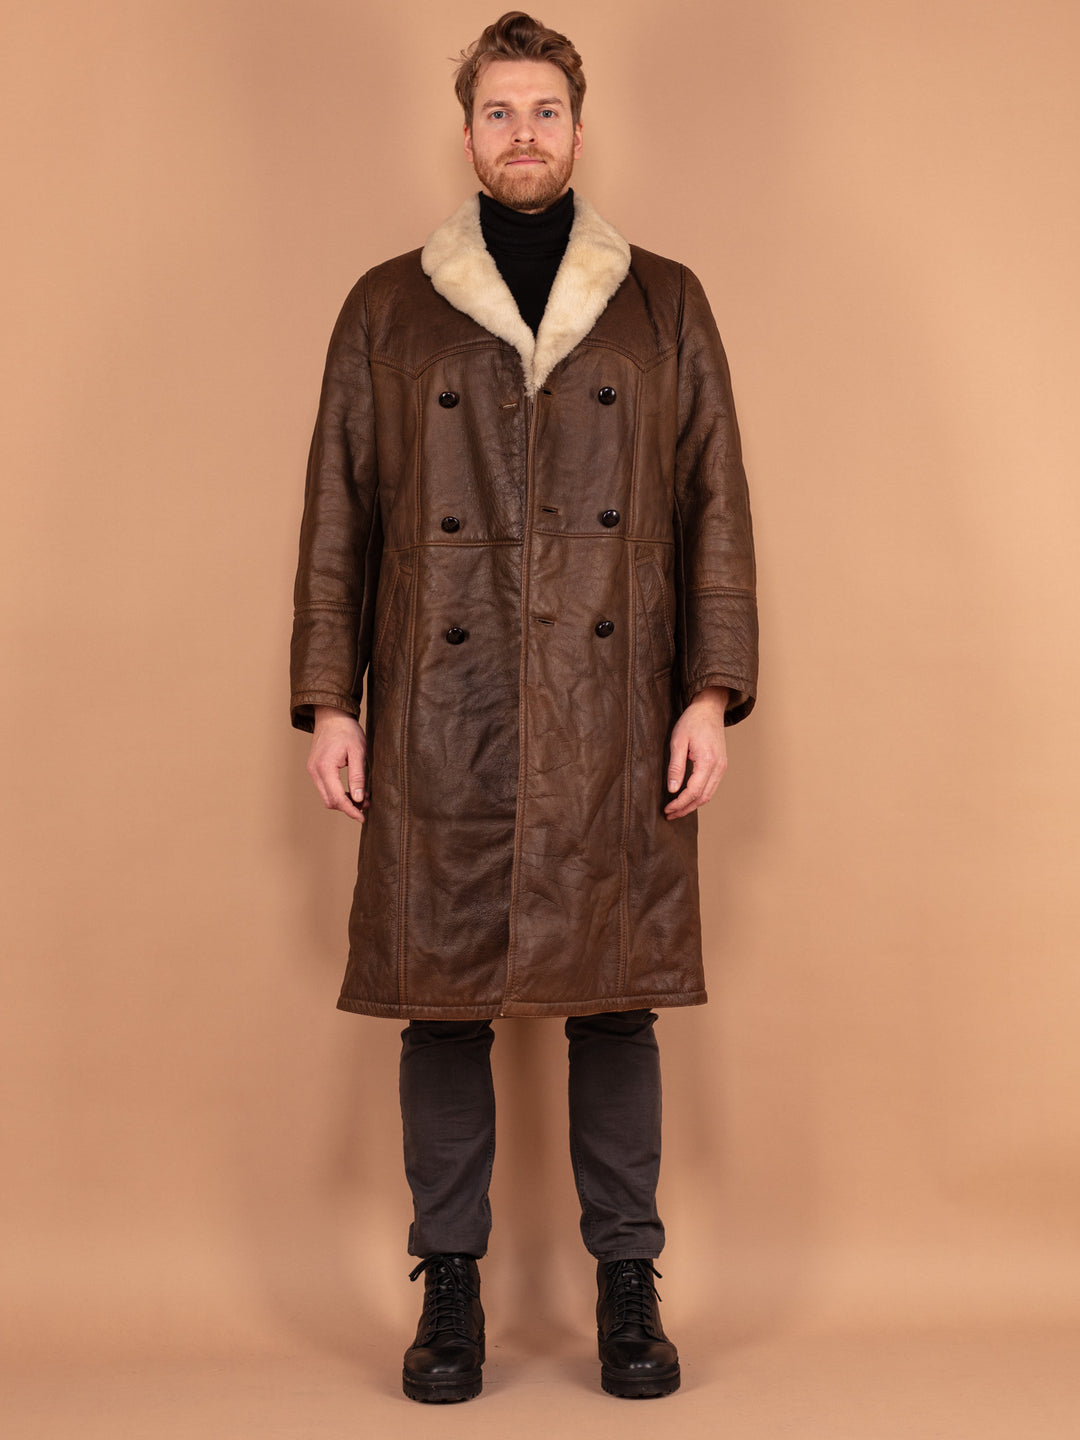 Brown Sheepskin Leather Coat 70's, Size Medium, Retro Winter Coat, Vintage Outerwear, Shearling Overcoat, Western Style Coat, Mens Long Coat